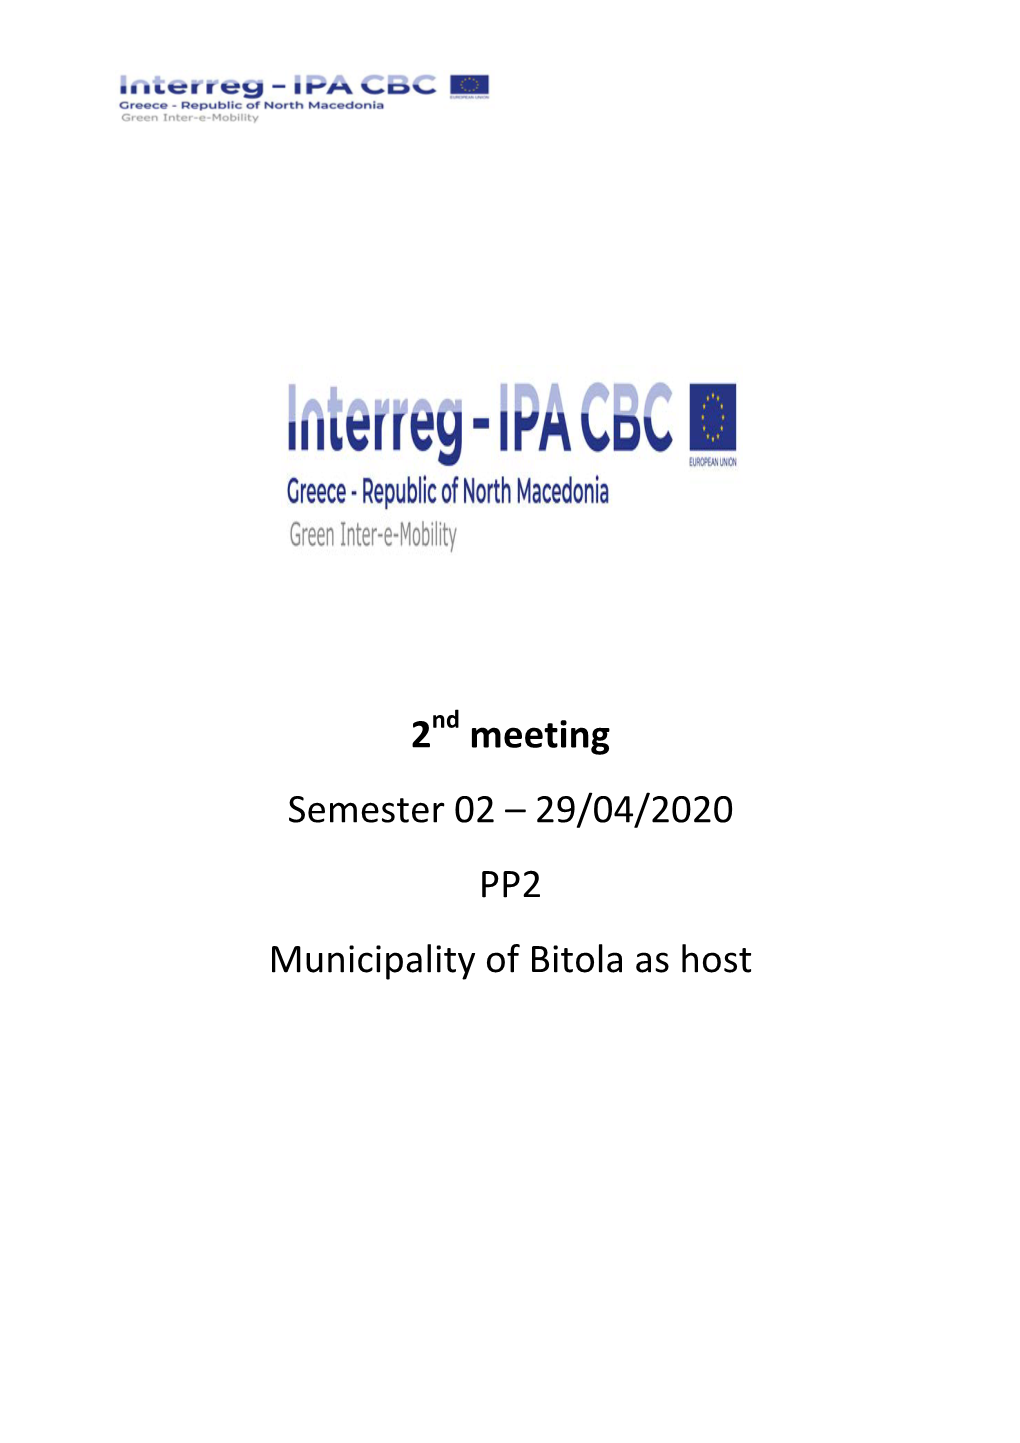 2 Meeting Semester 02 – 29/04/2020 PP2 Municipality of Bitola As Host